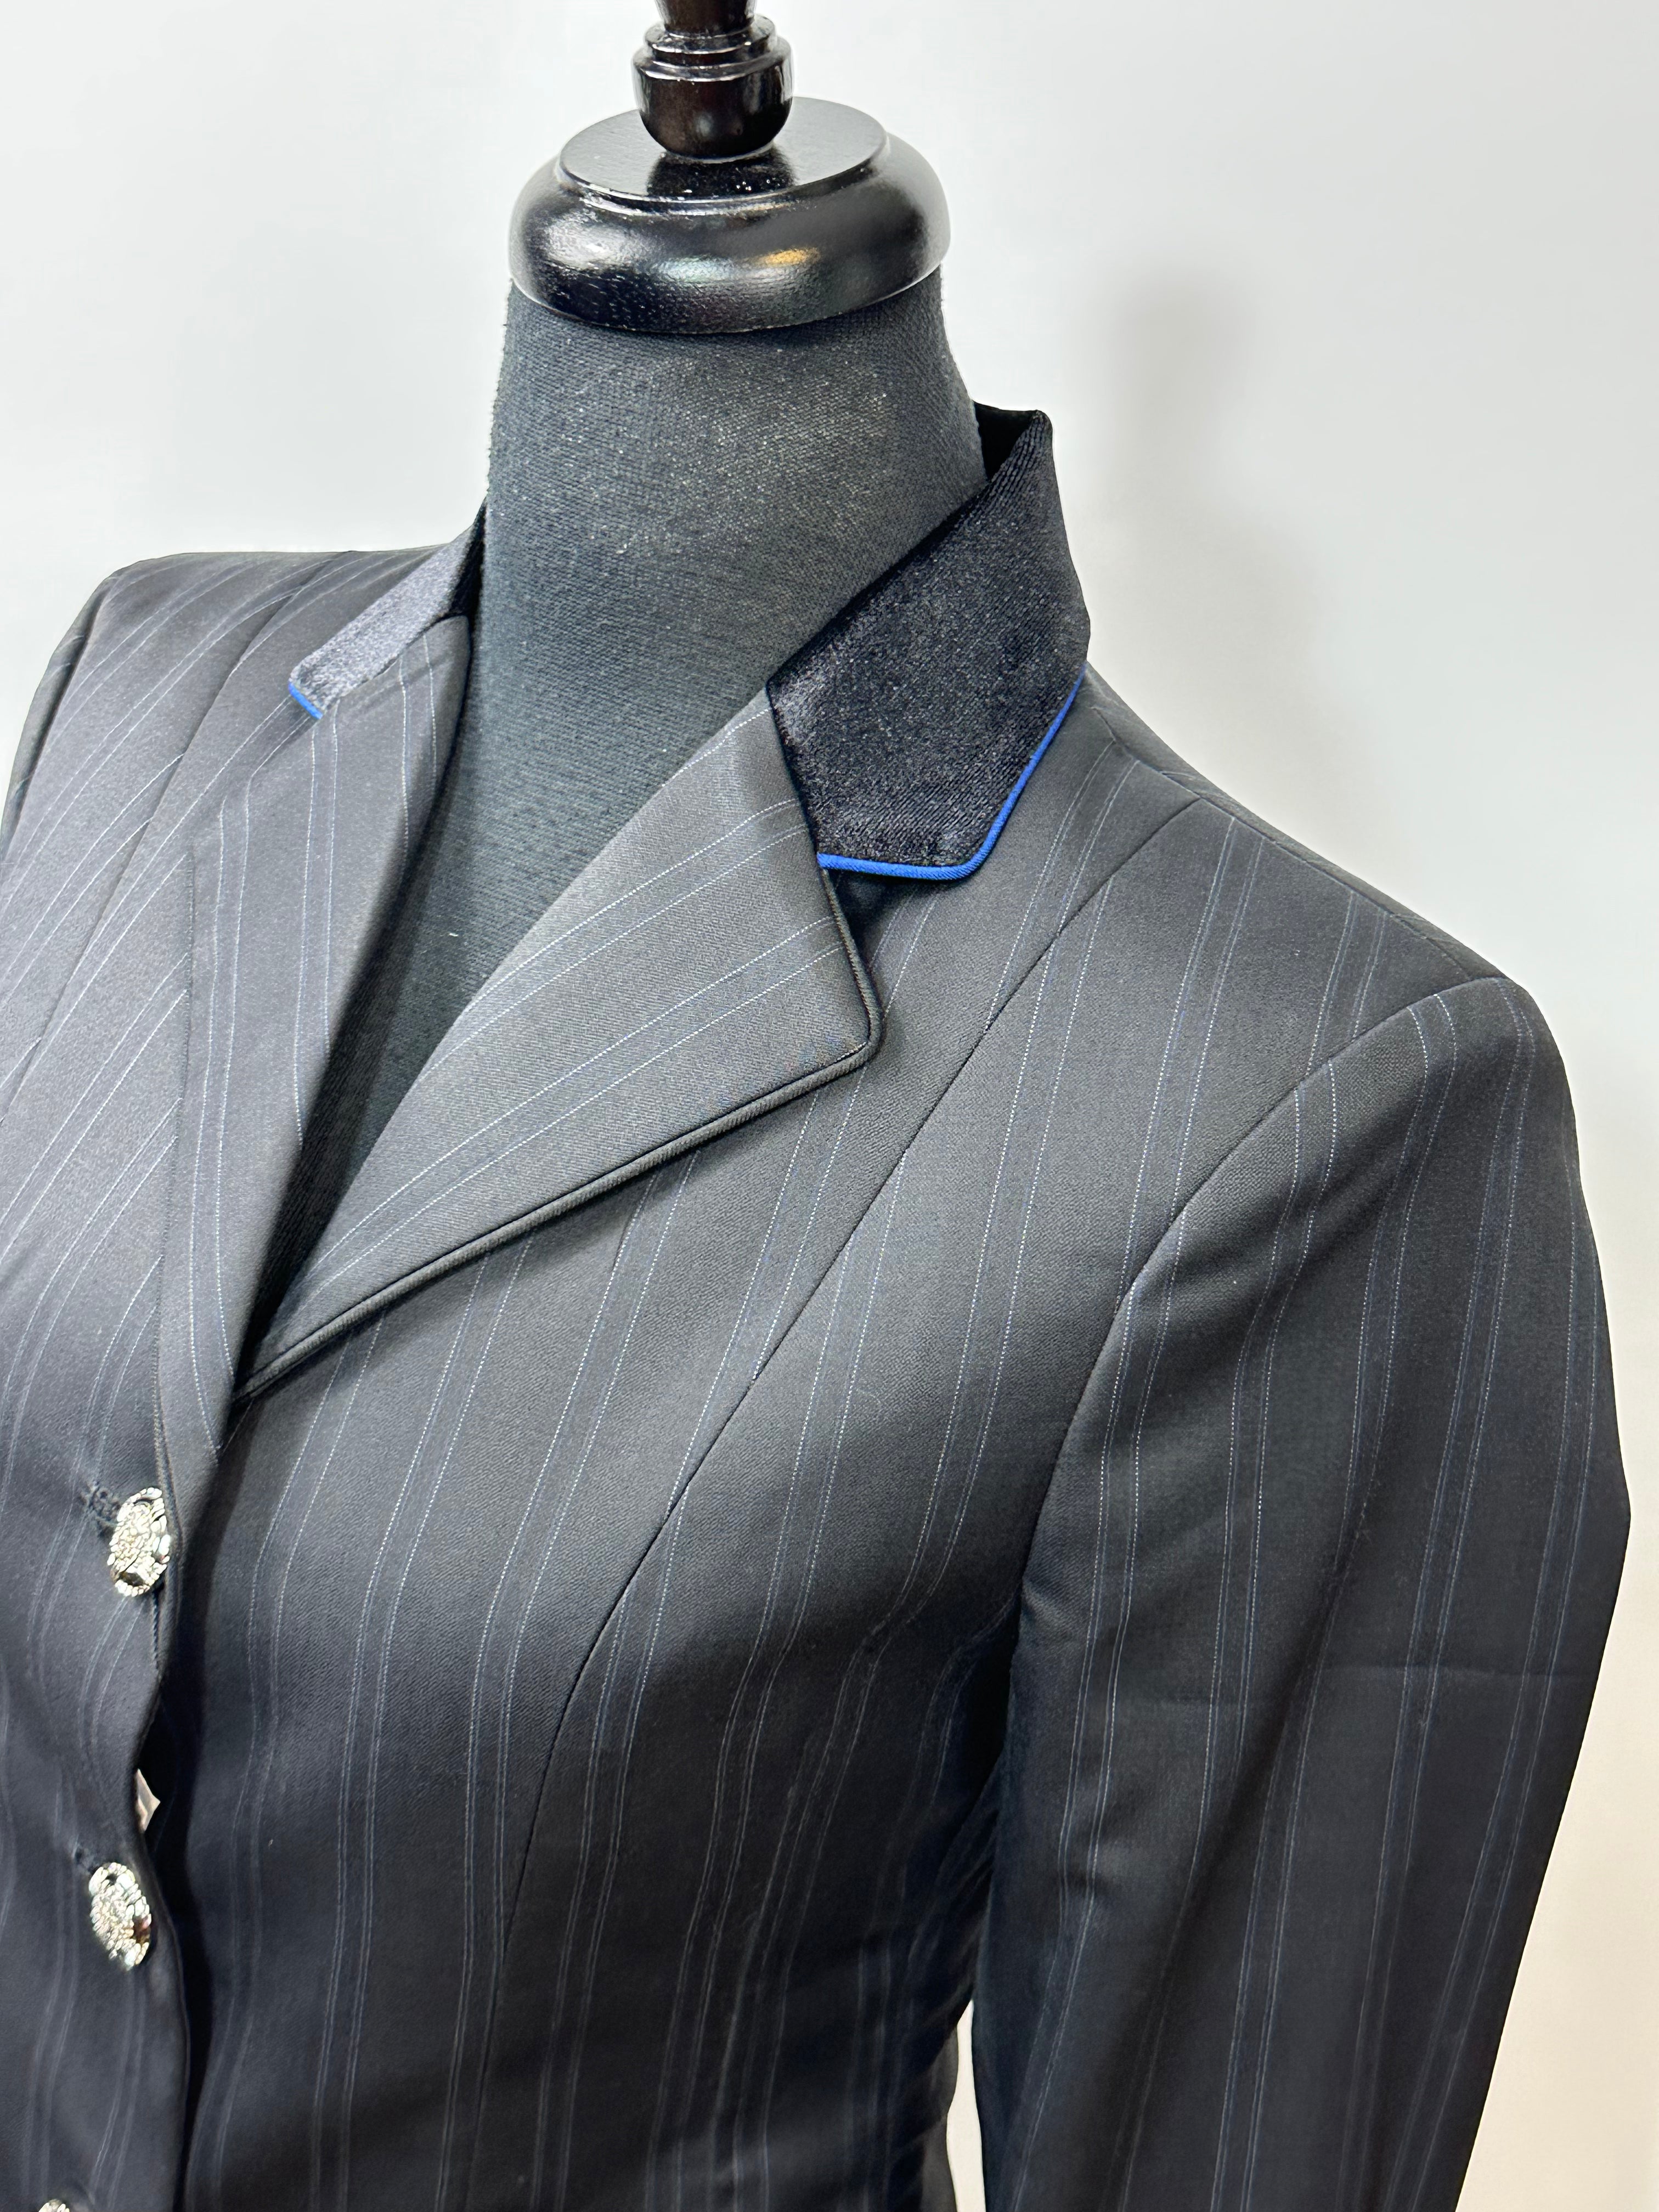 English Show Coat Black Blue Stripe Fabric Code R360